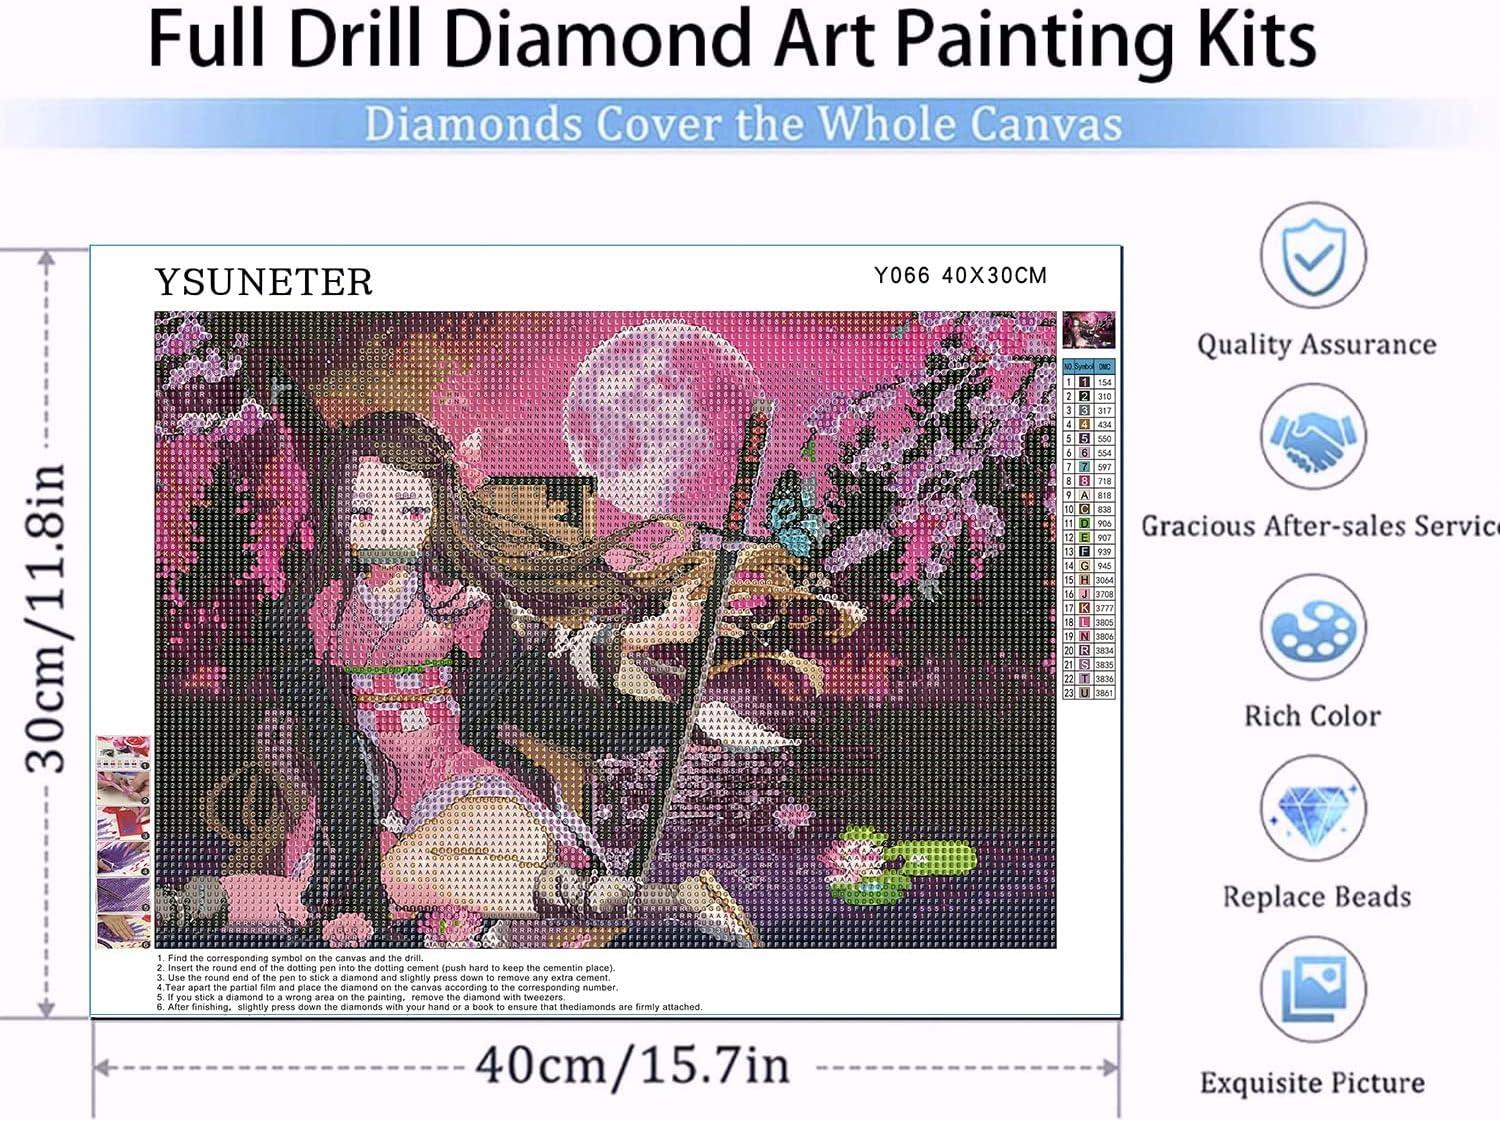 YSUNETER Mushroom Diamond Art Painting Kits for Adults -Round Full